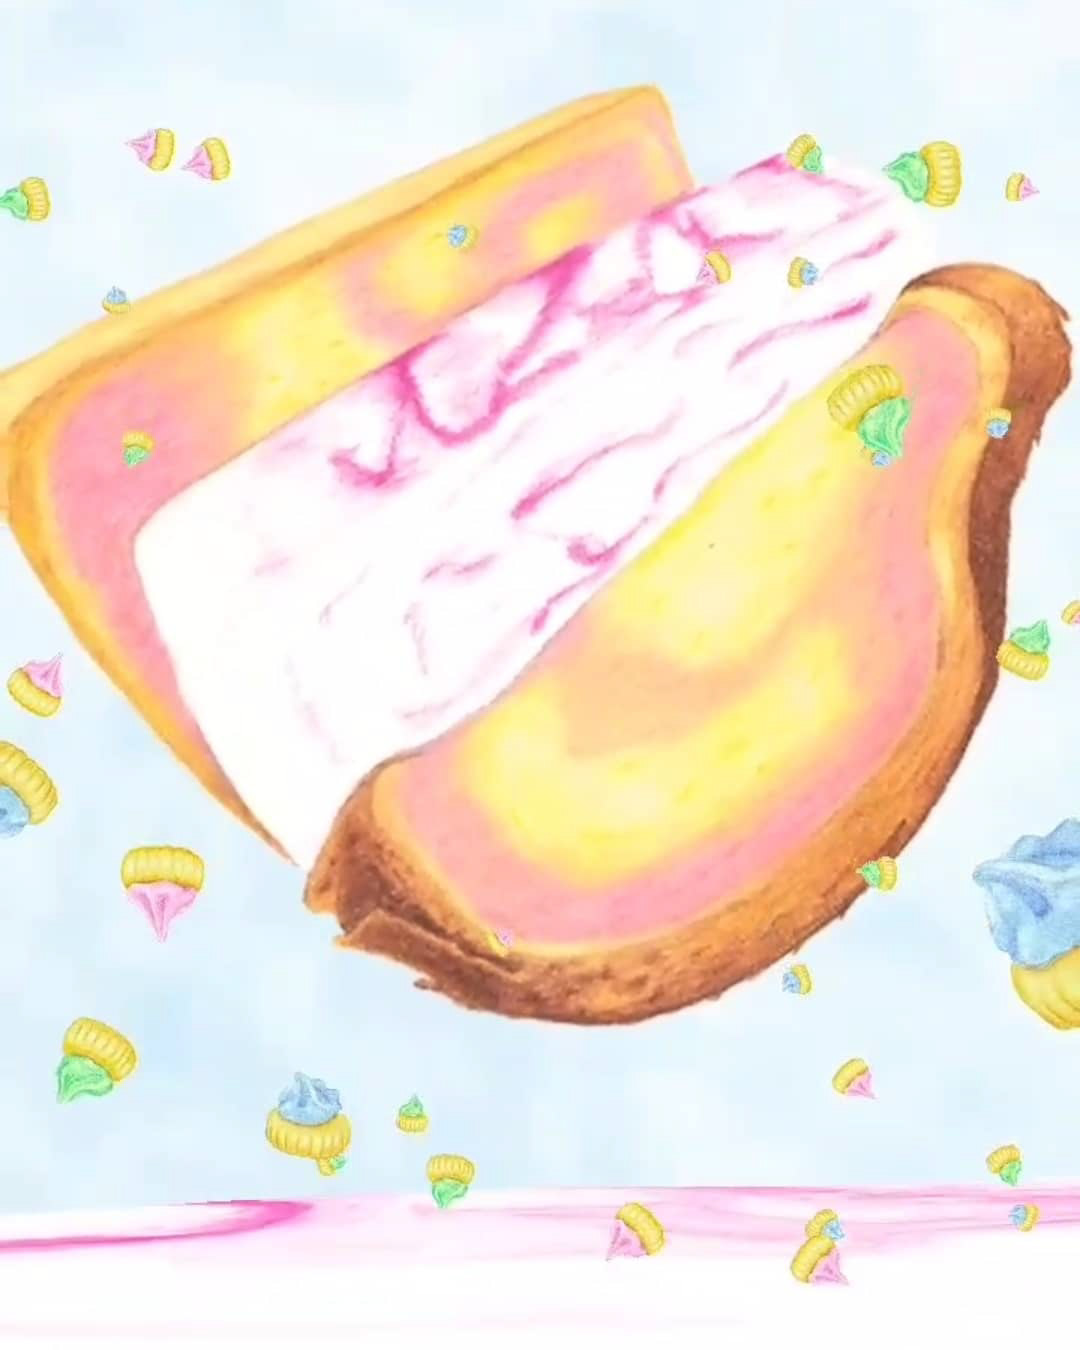 screenshot of illustration ice cream sandwich augmented reality instagram filer dessert wonderland